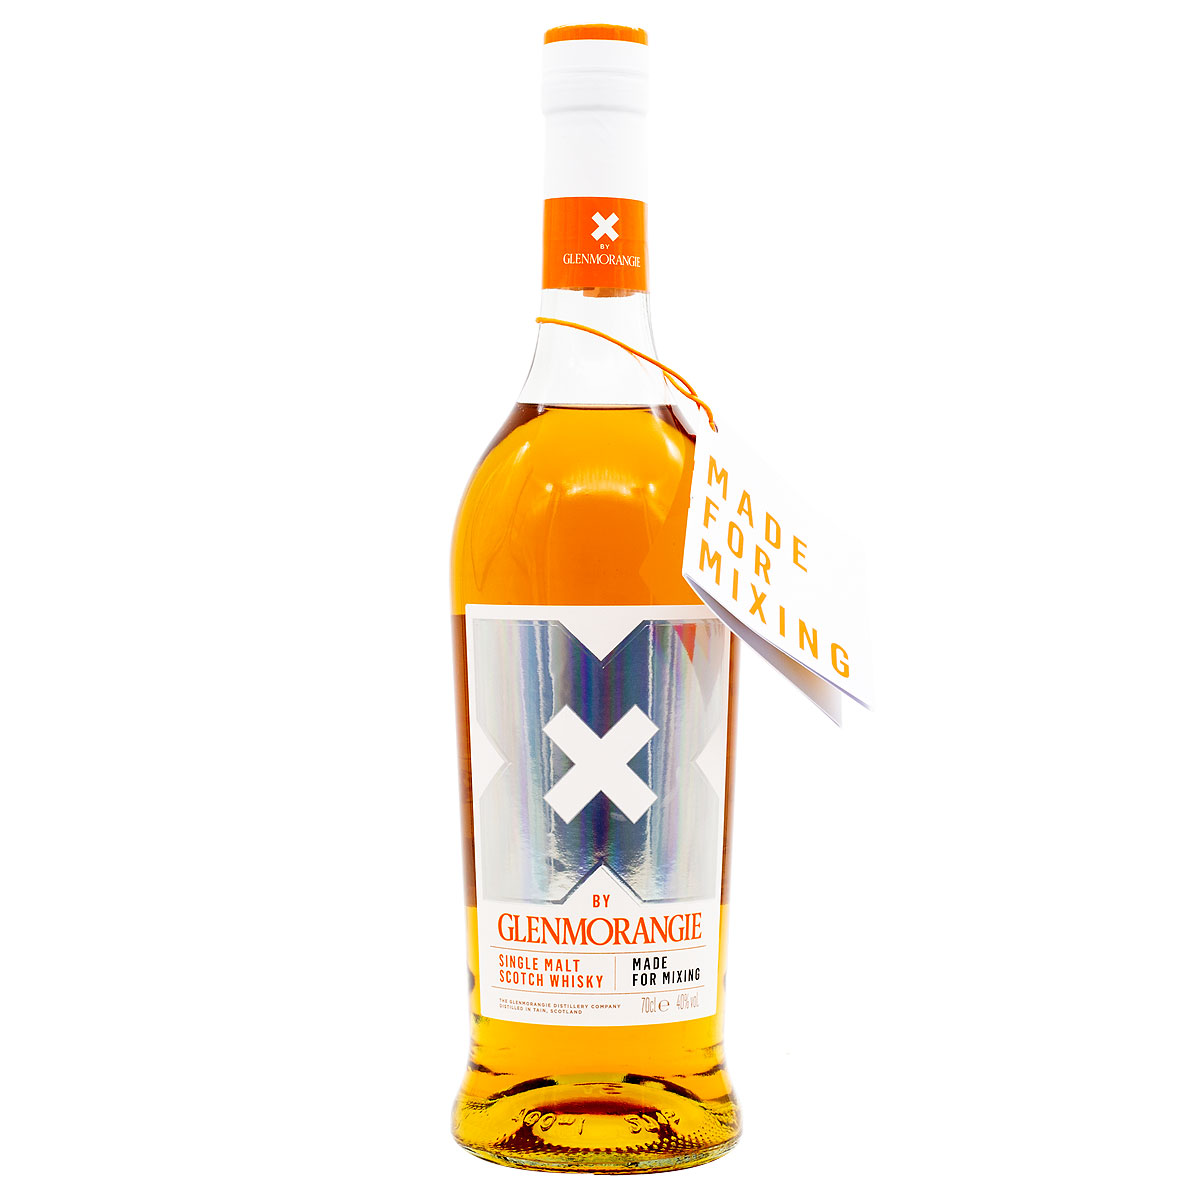 Made for Mixing: Glenmorangie X Single Malt Scotch Whisky